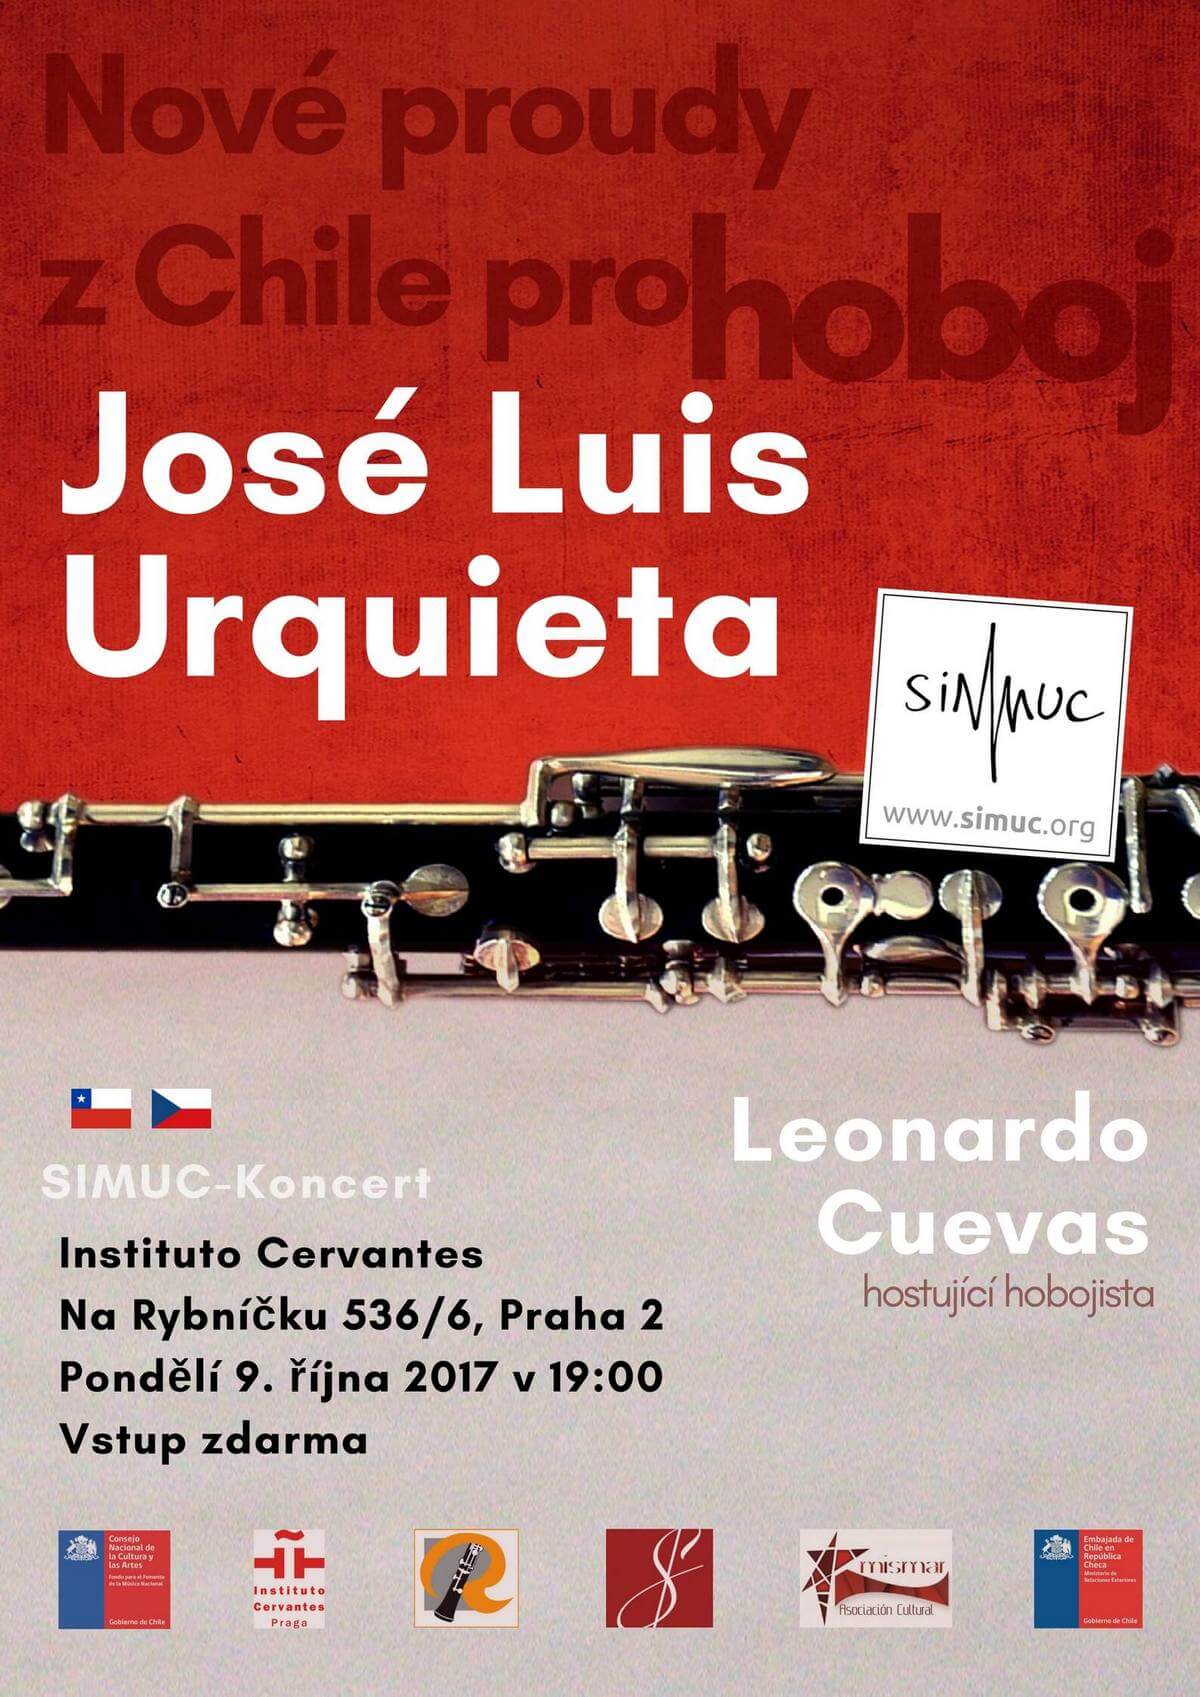 Oboist José Luis Urquieta in Prague